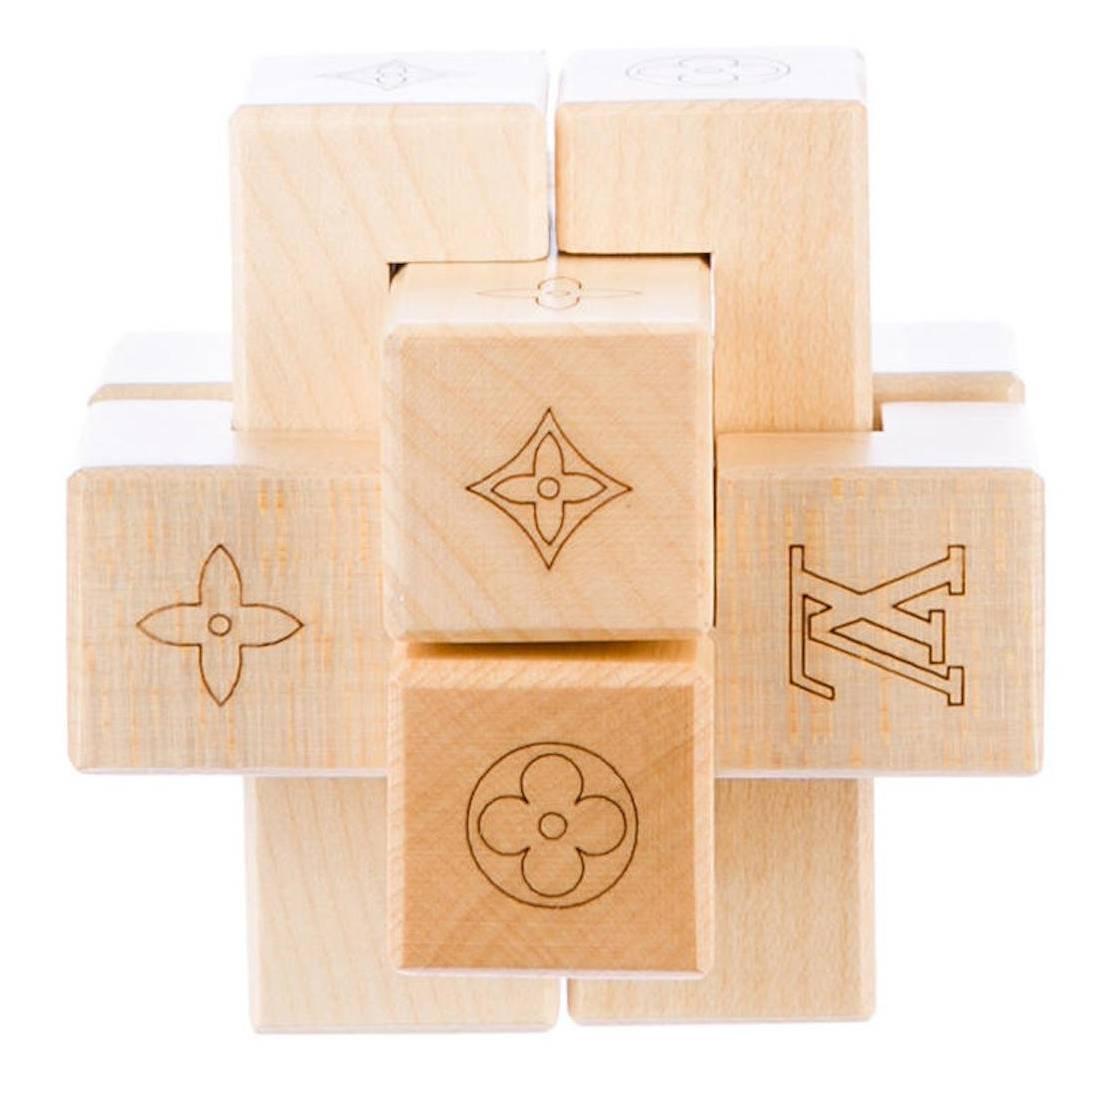 Louis Vuitton Monogram Logo Wood Game Puzzle Desk Table Decorative in Box 